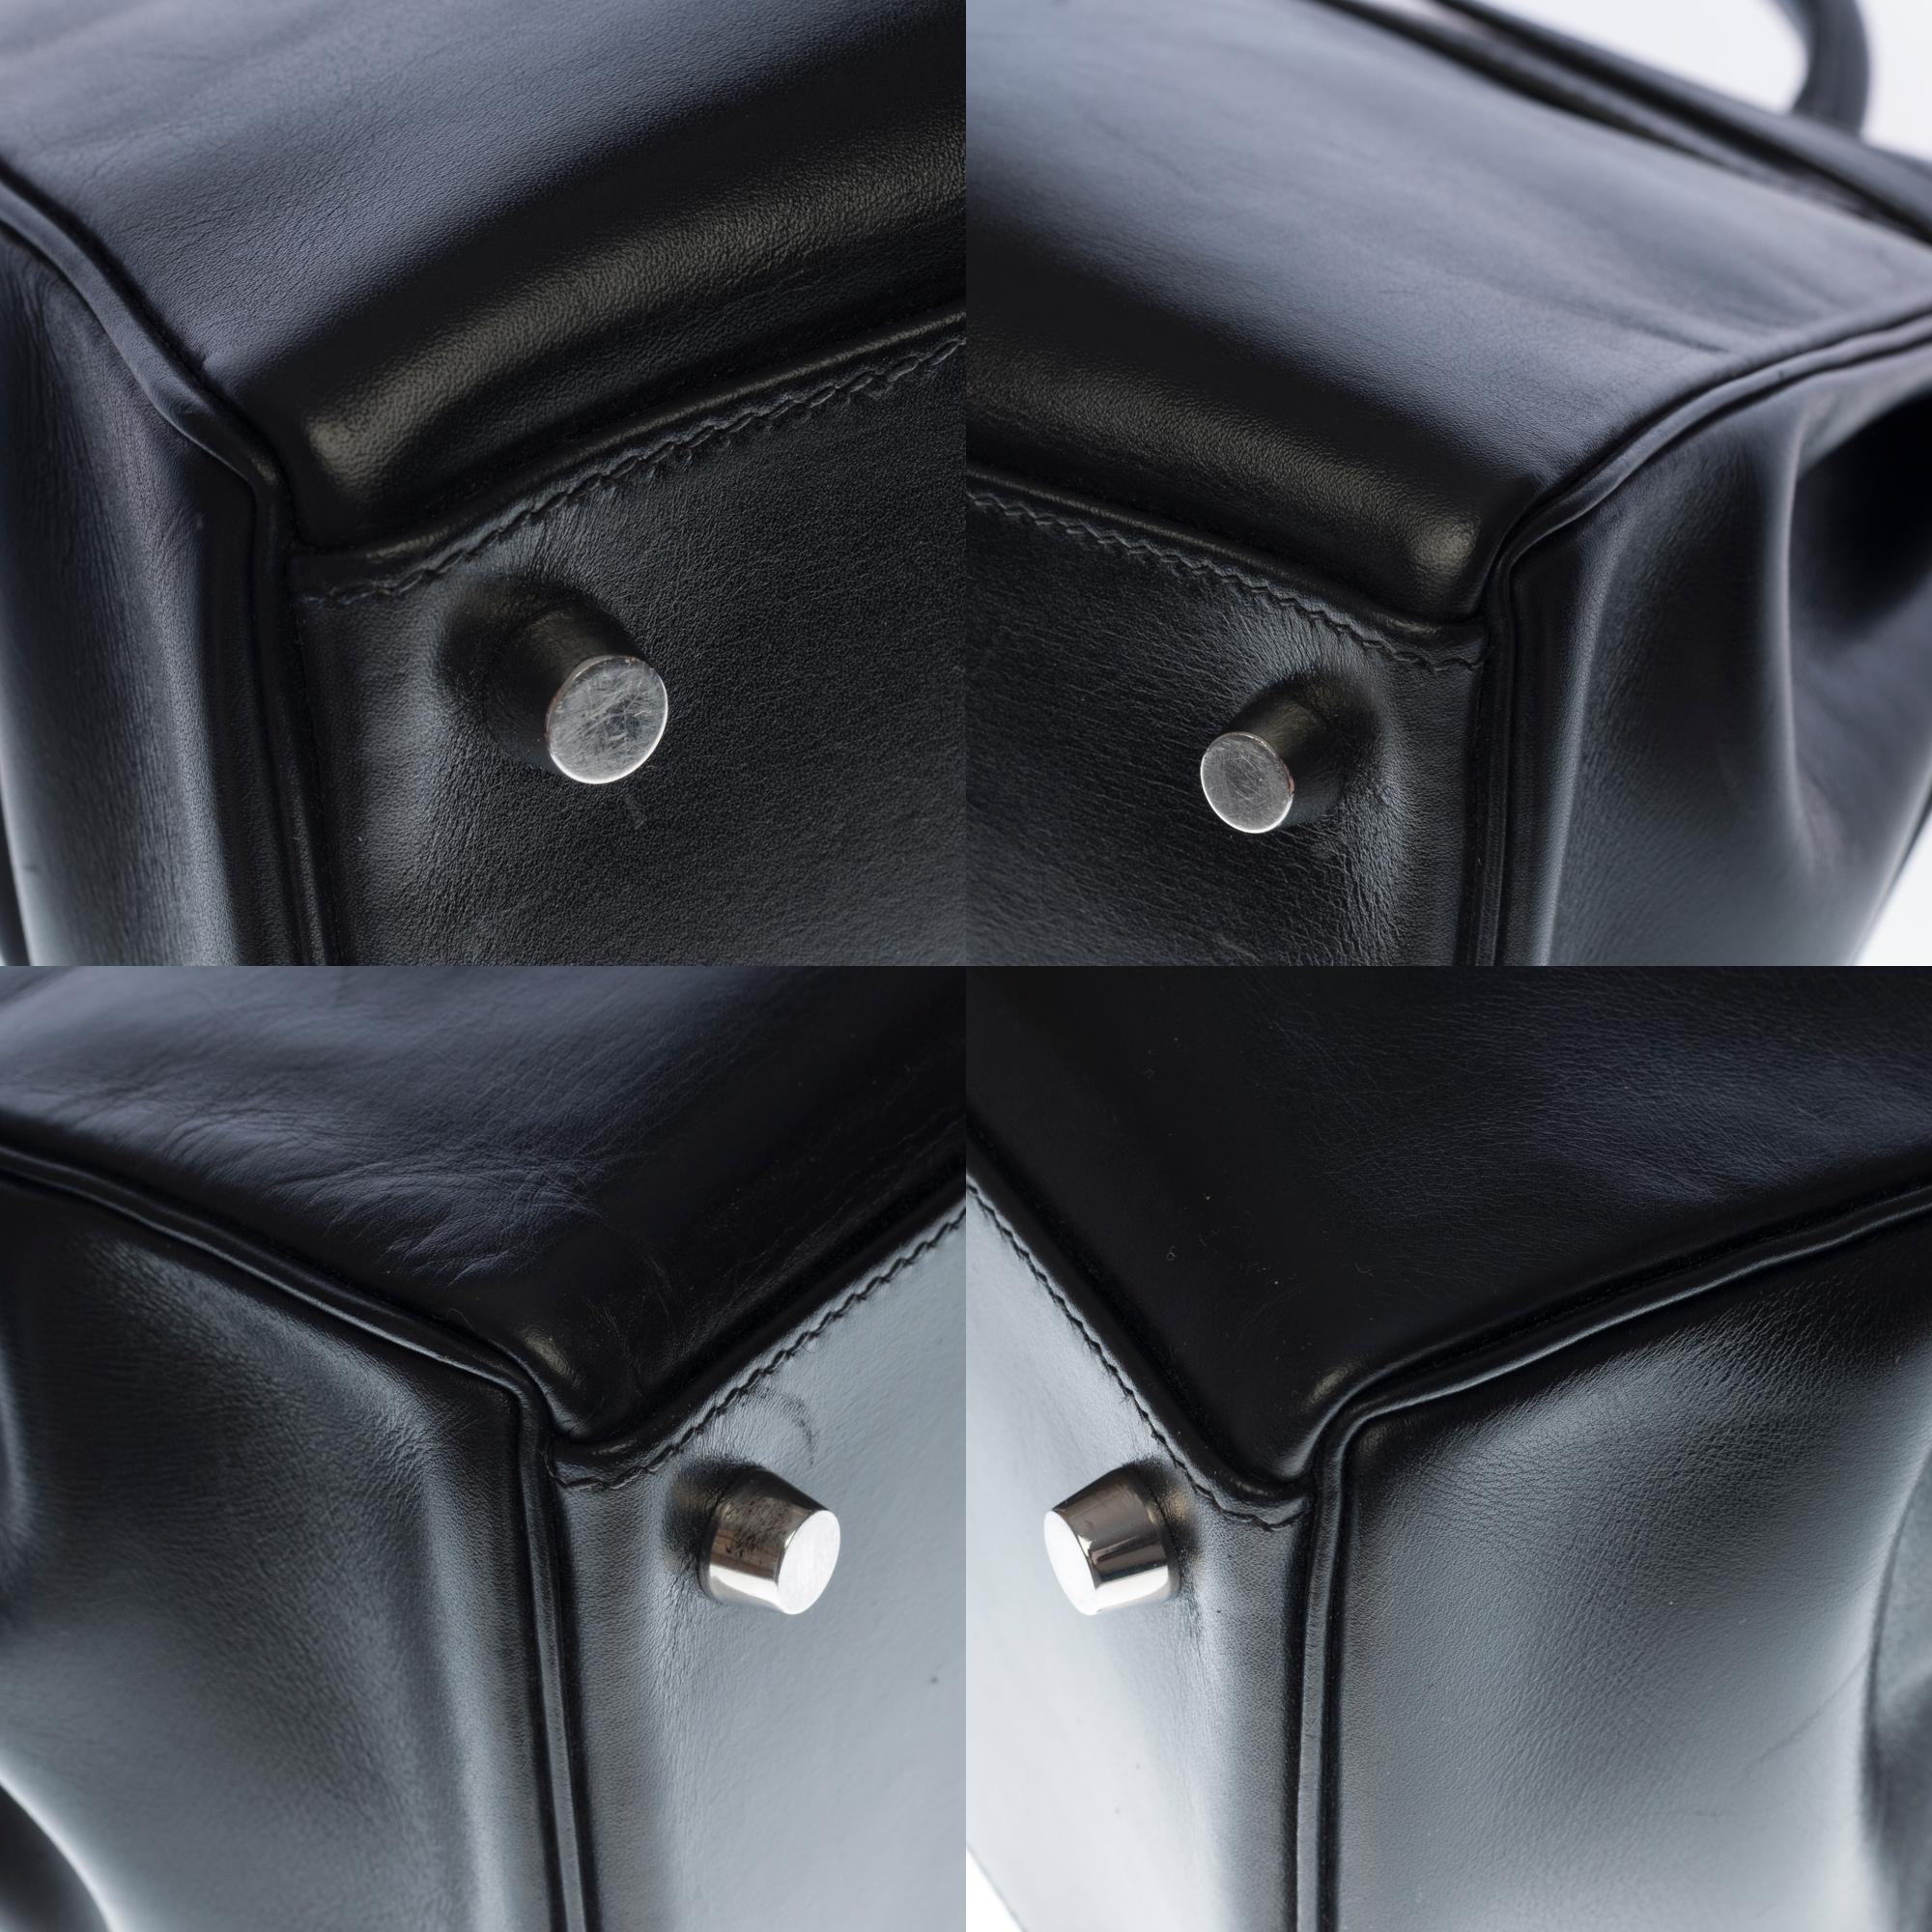 Rare Hermès Kelly 32 retourné handbag with strap in black calf leather, SHW 4